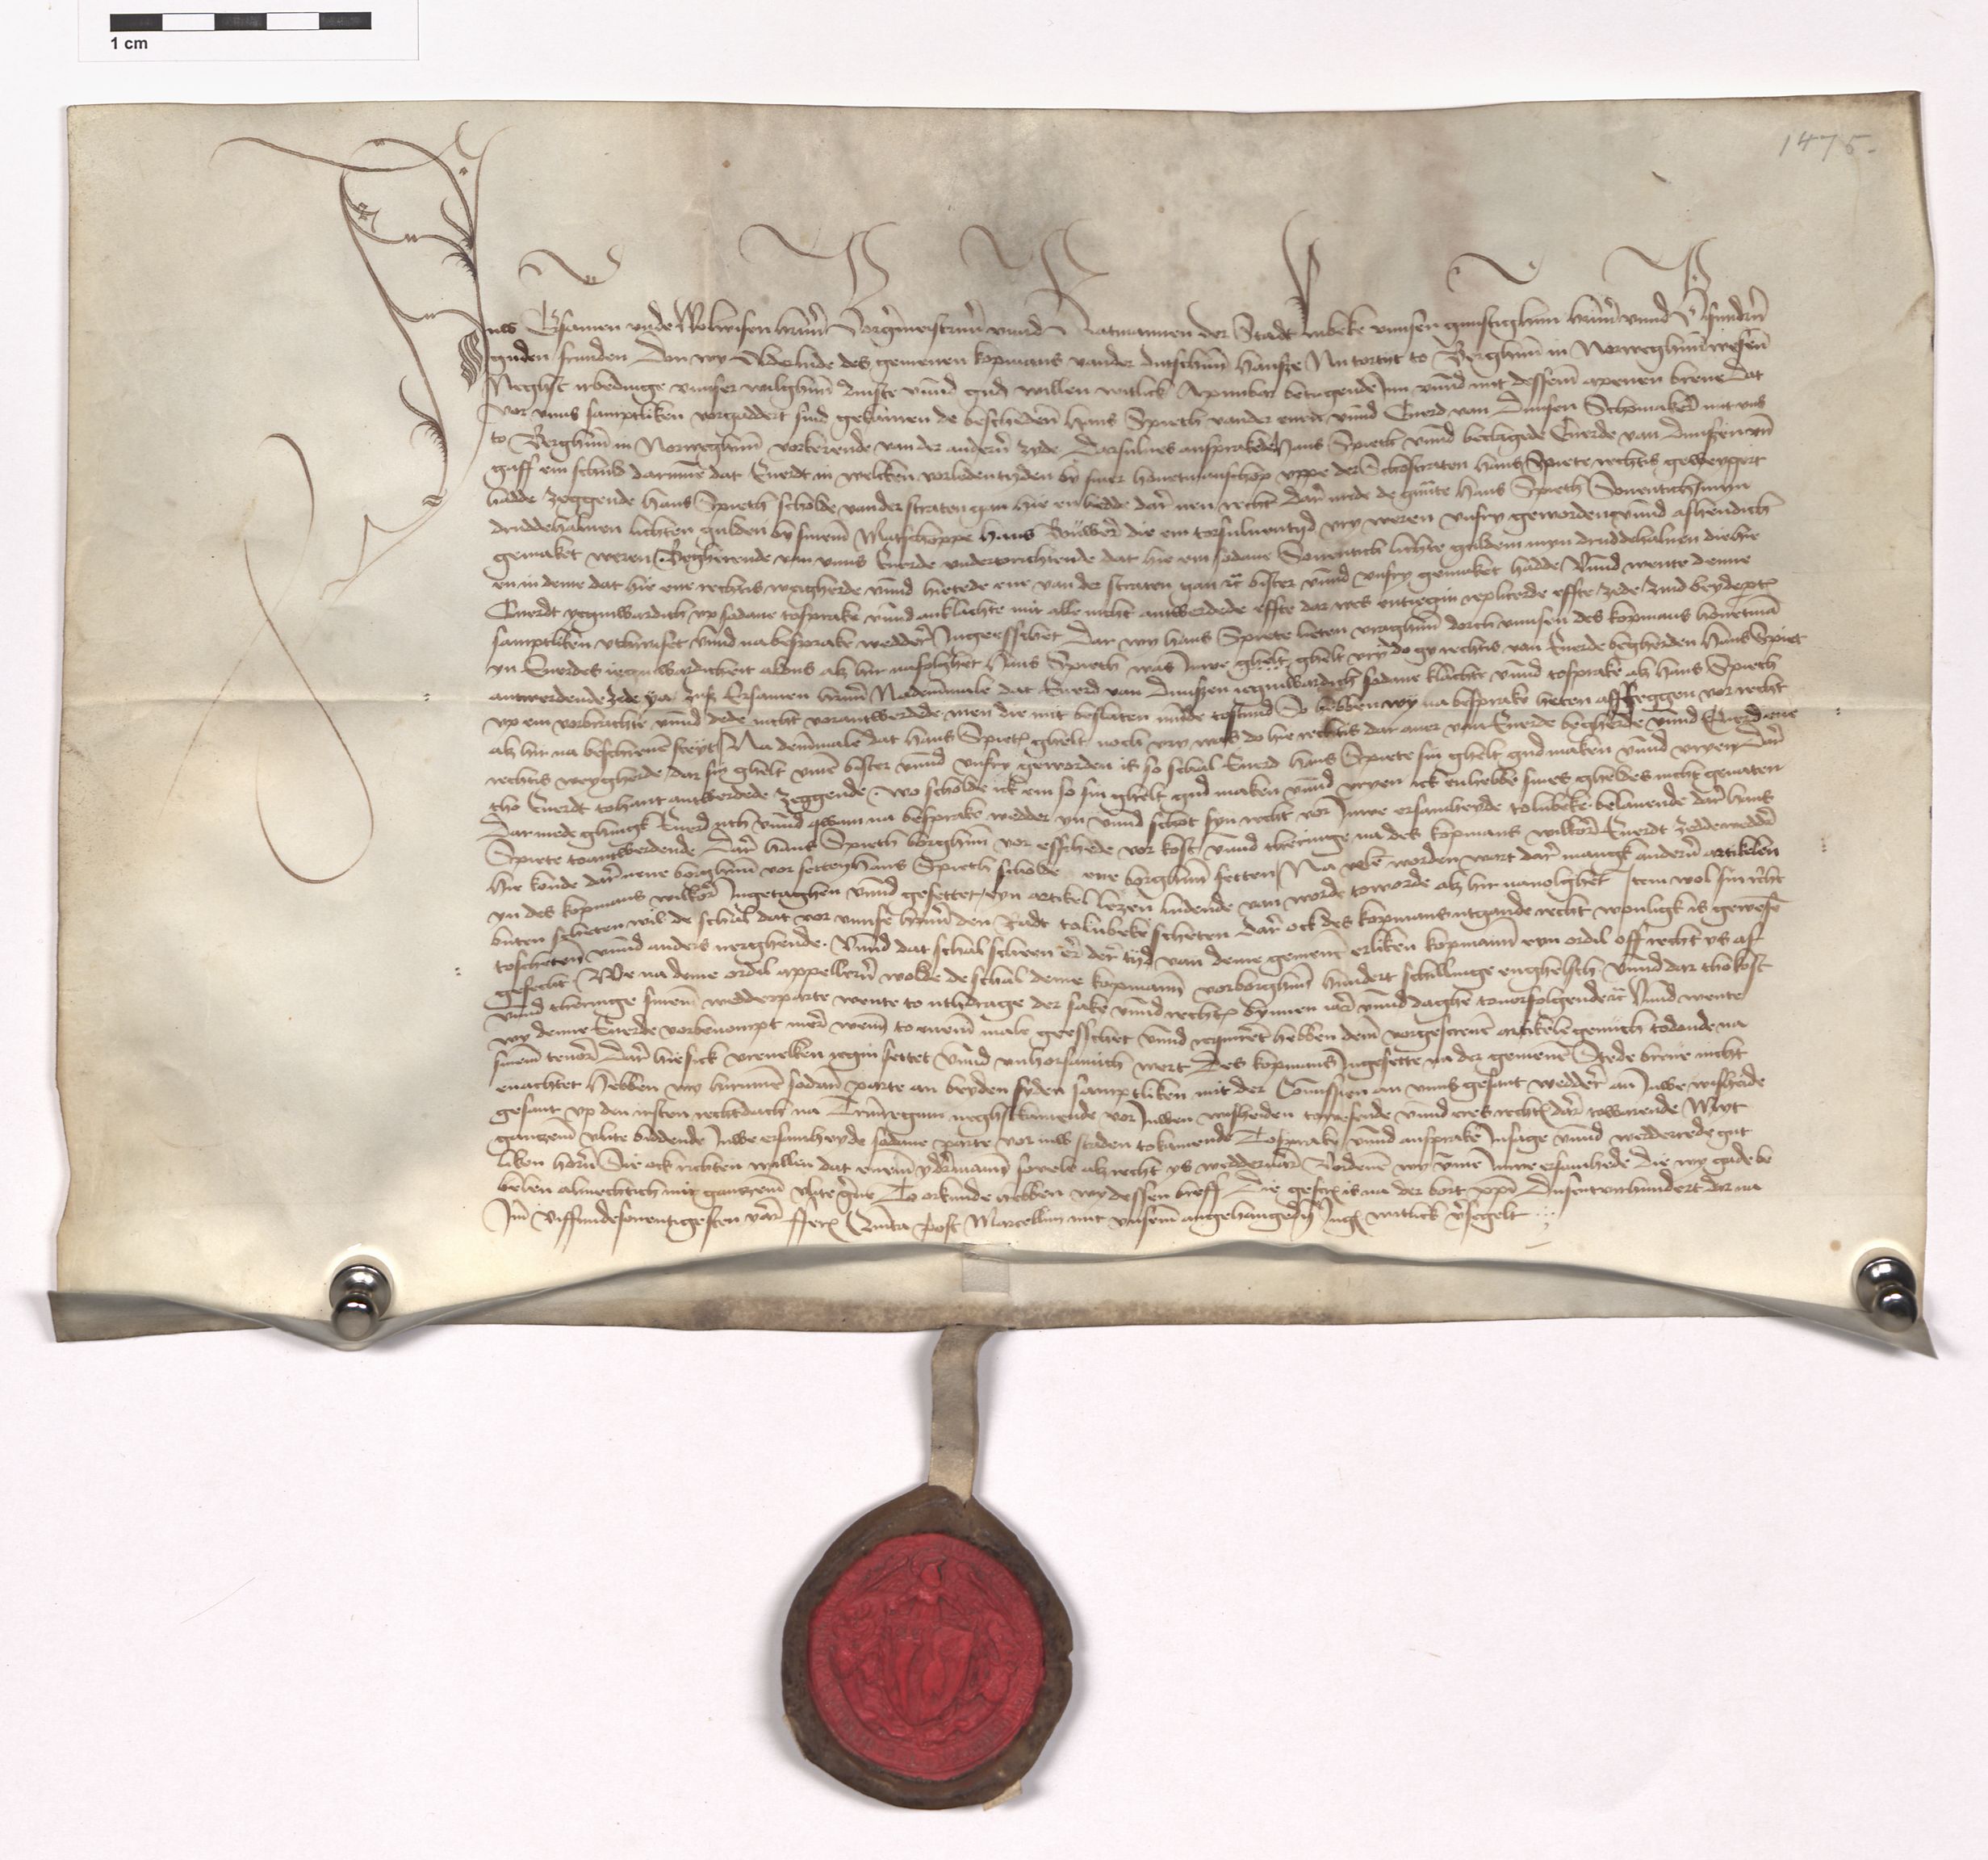 07.1 Urkunden, 3 Auswärtige Beziehungen (Externa), AHL/-/21: Norwegen (Norvagica); Kontor zu Bergen, 1247-1747, s. 795